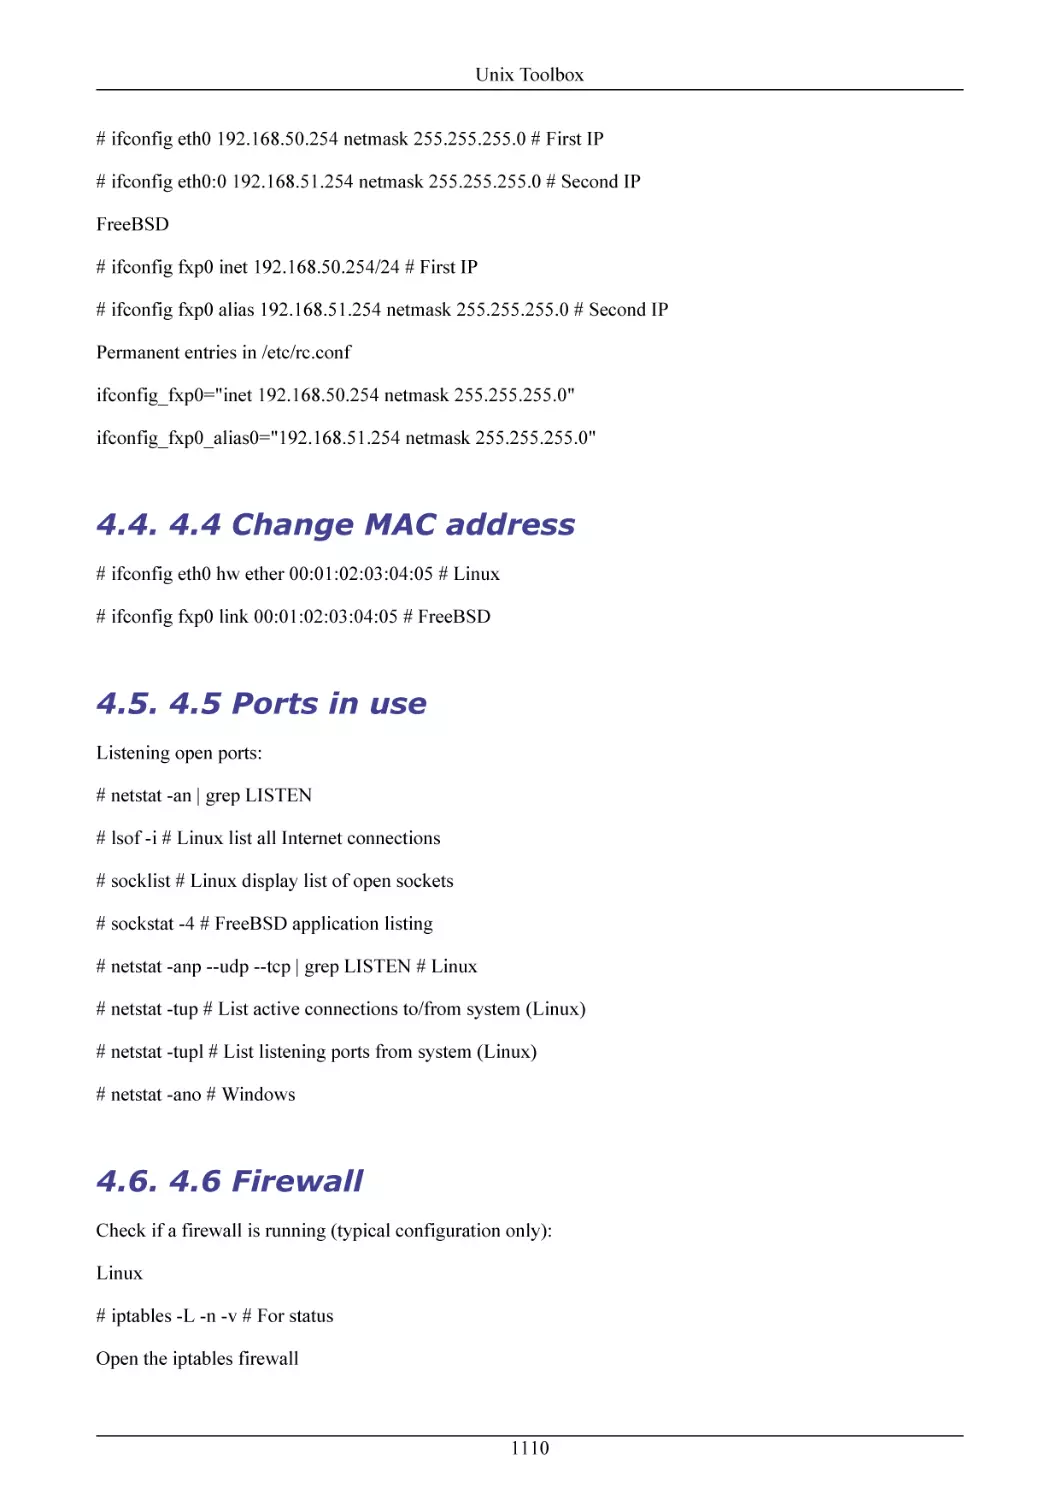 4.4 Change MAC address
4.5 Ports in use
4.6 Firewall